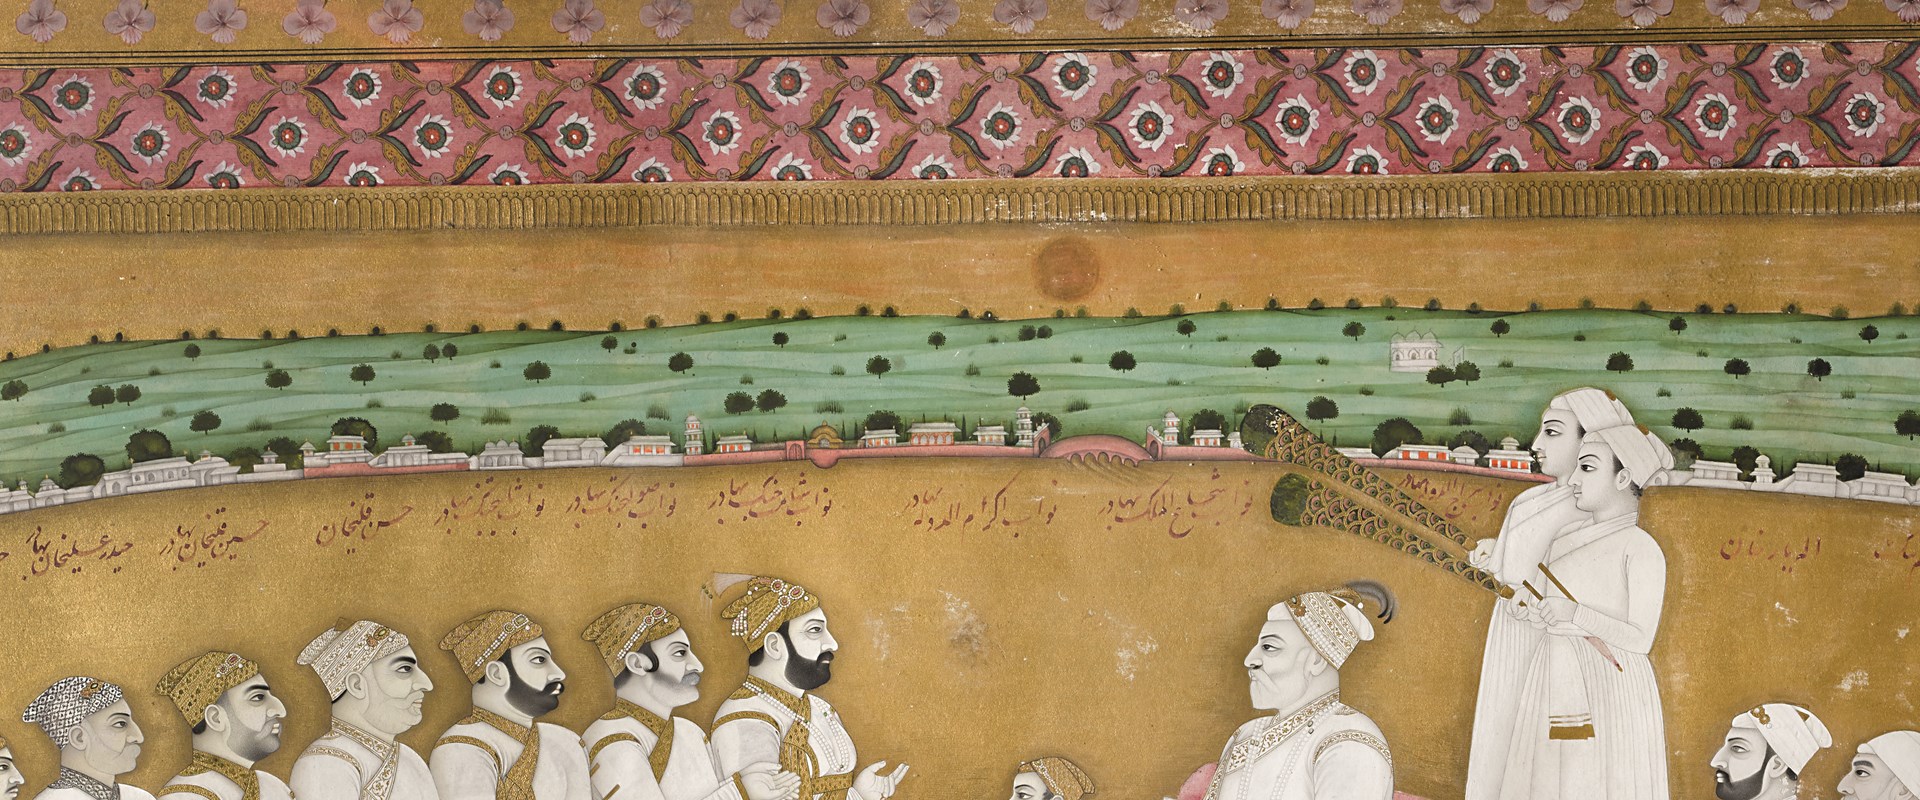 Miniature painting of the court of the Nawab of Bengal, Alivardi Khan, by a Murshidabad artist, ca. 1750.